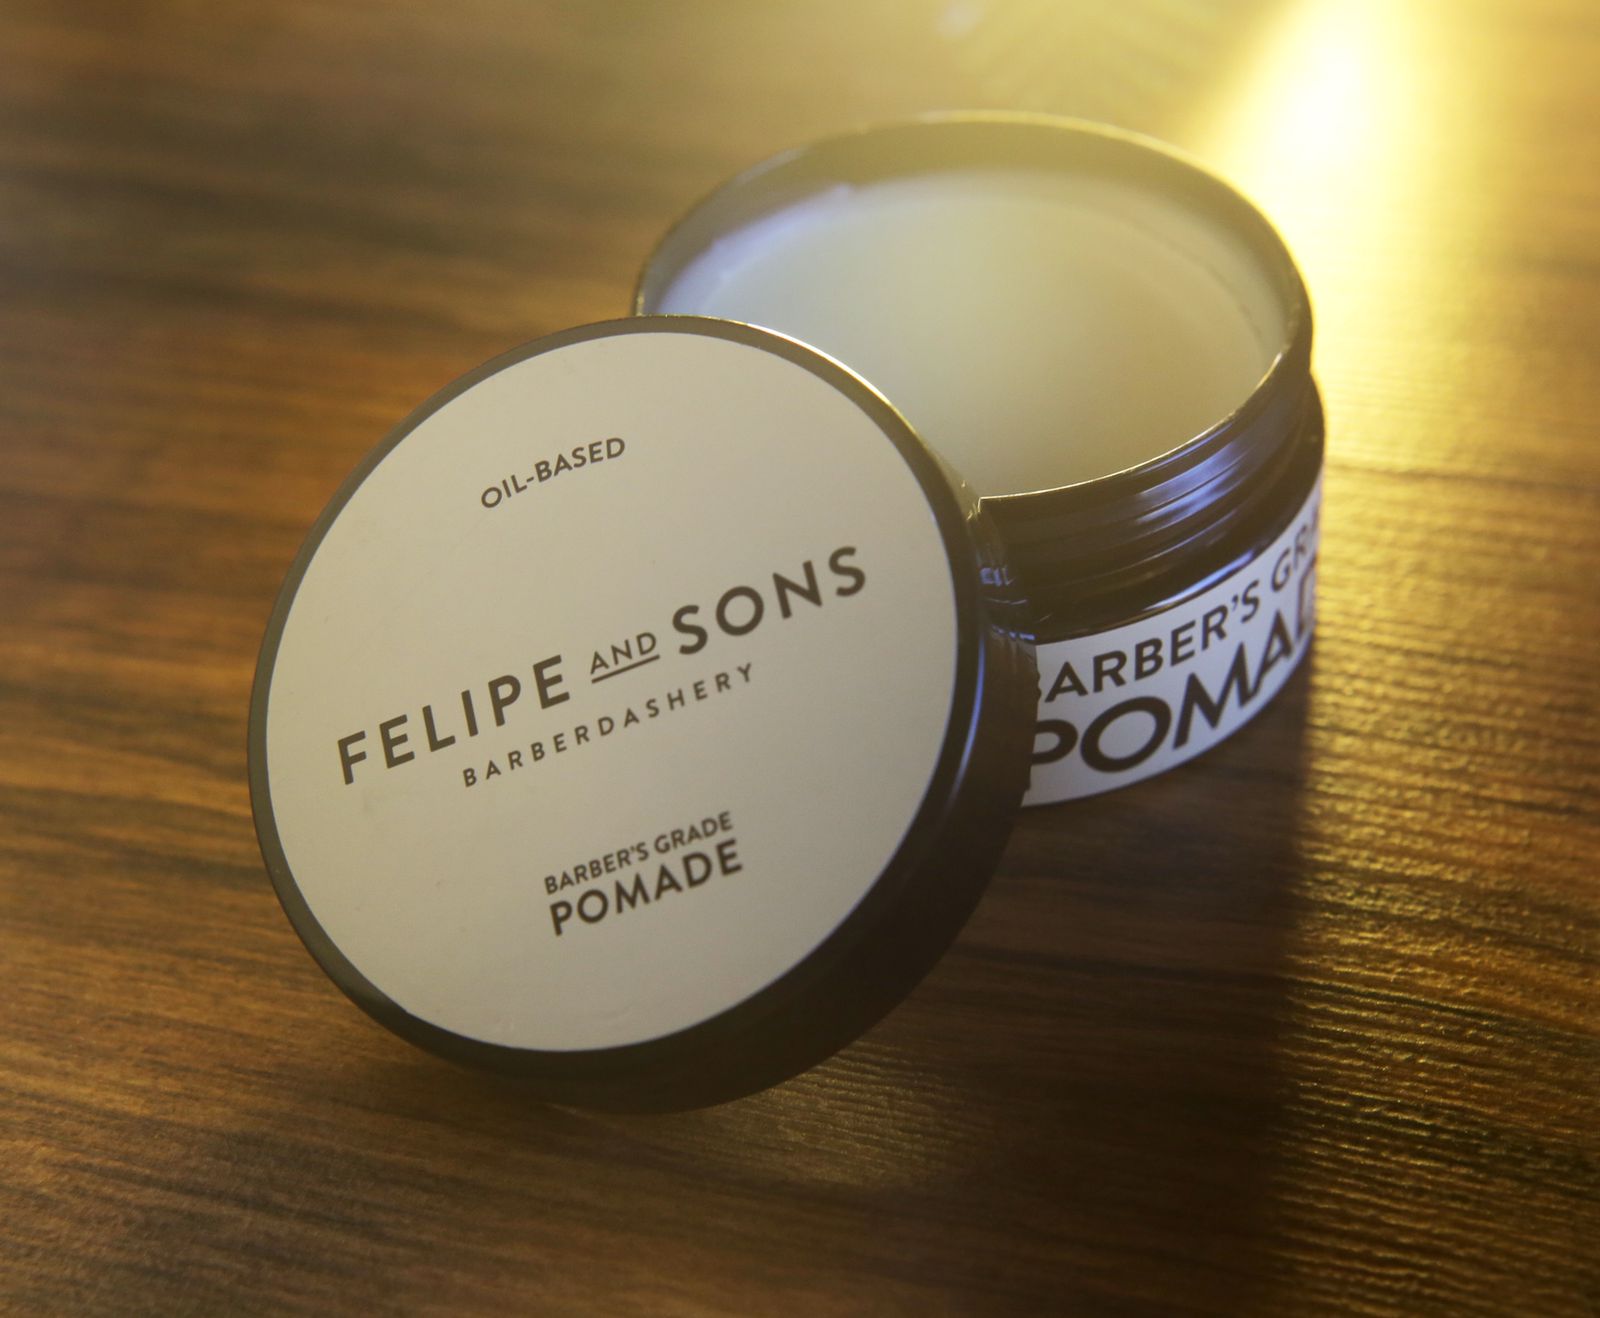 Felipe And Sons ₱200 PH Gift Card